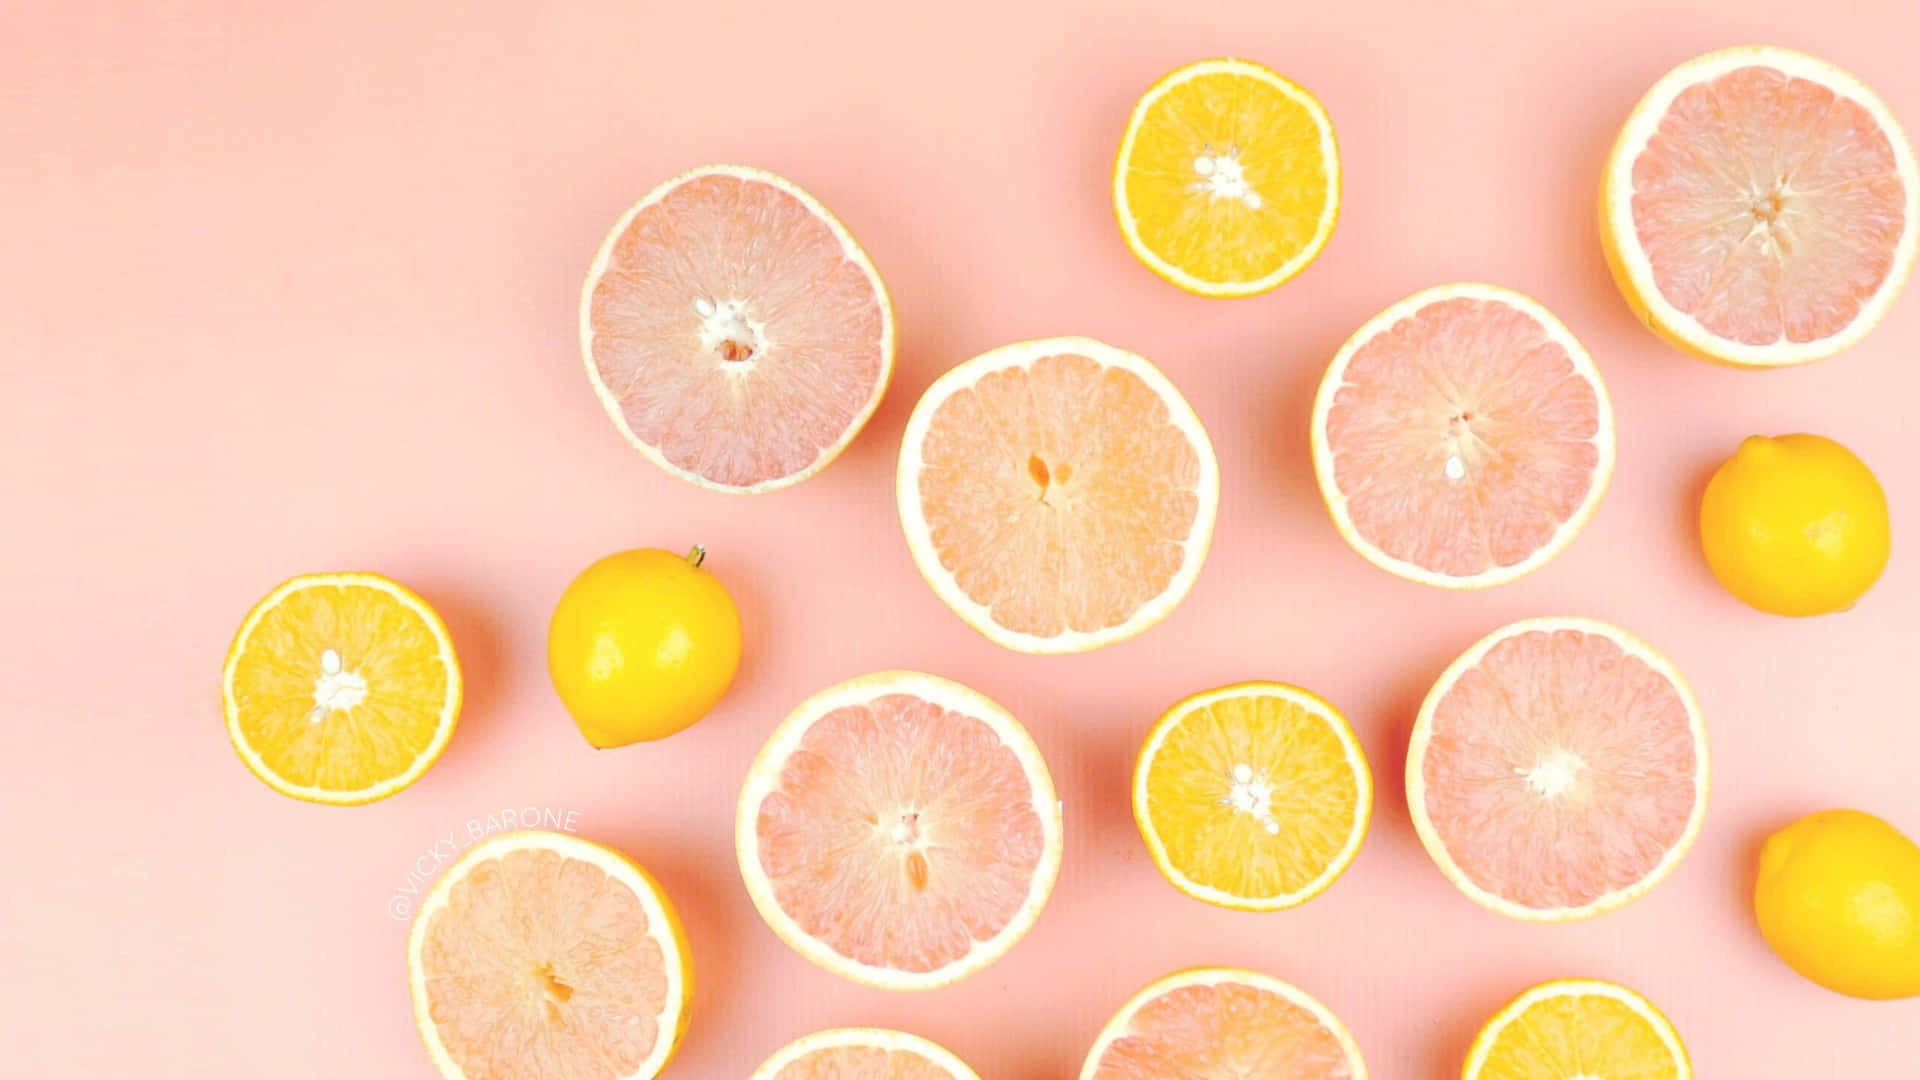 Citrus Fruit Assortment Pink Background Wallpaper